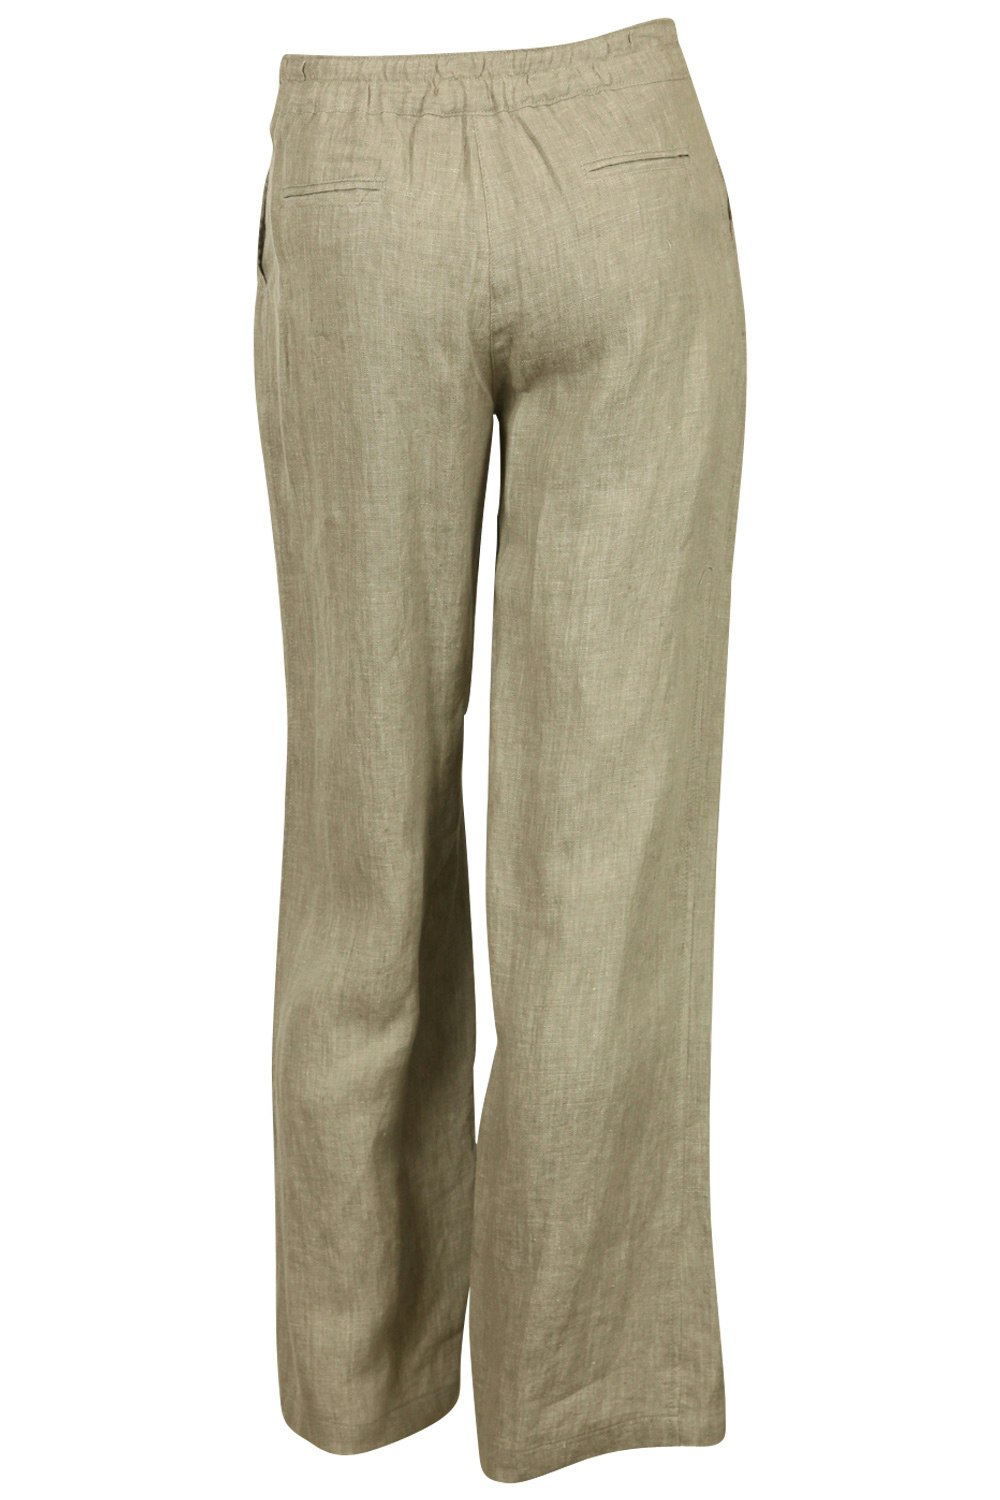 Hammock & Vine Dresses Herringbone Linen Pant - Womens Pants at ...